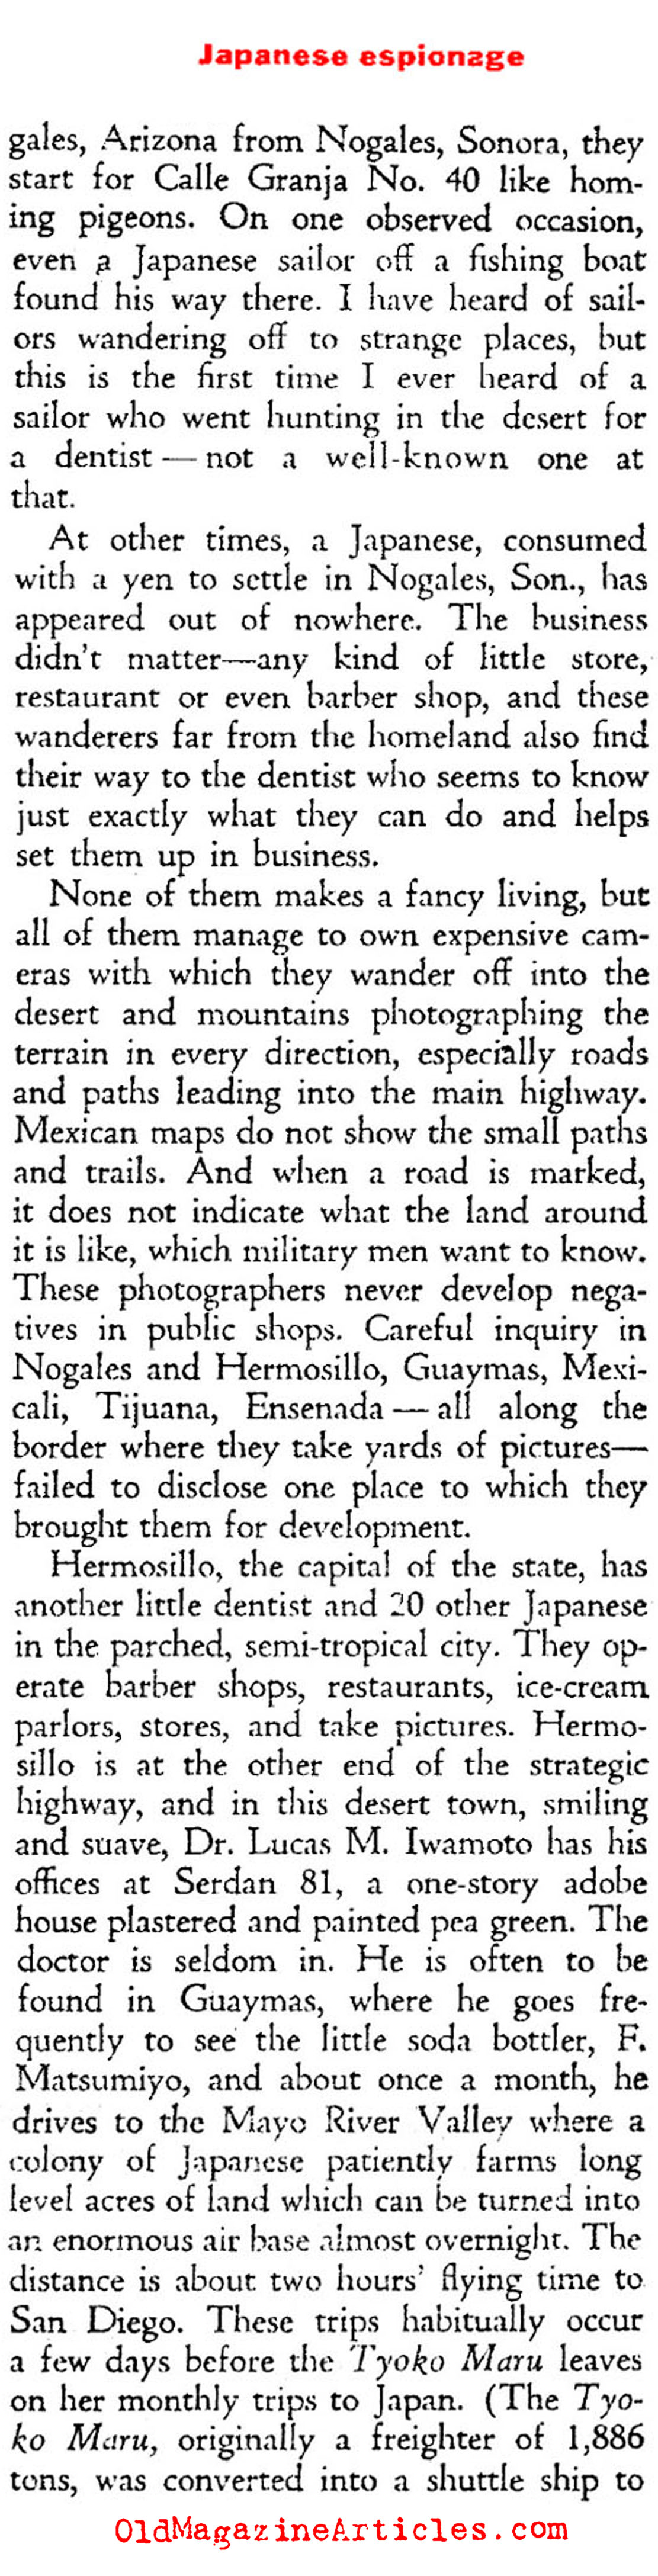 Japanese Spies on the West-Coast (Ken Magazine, 1939)